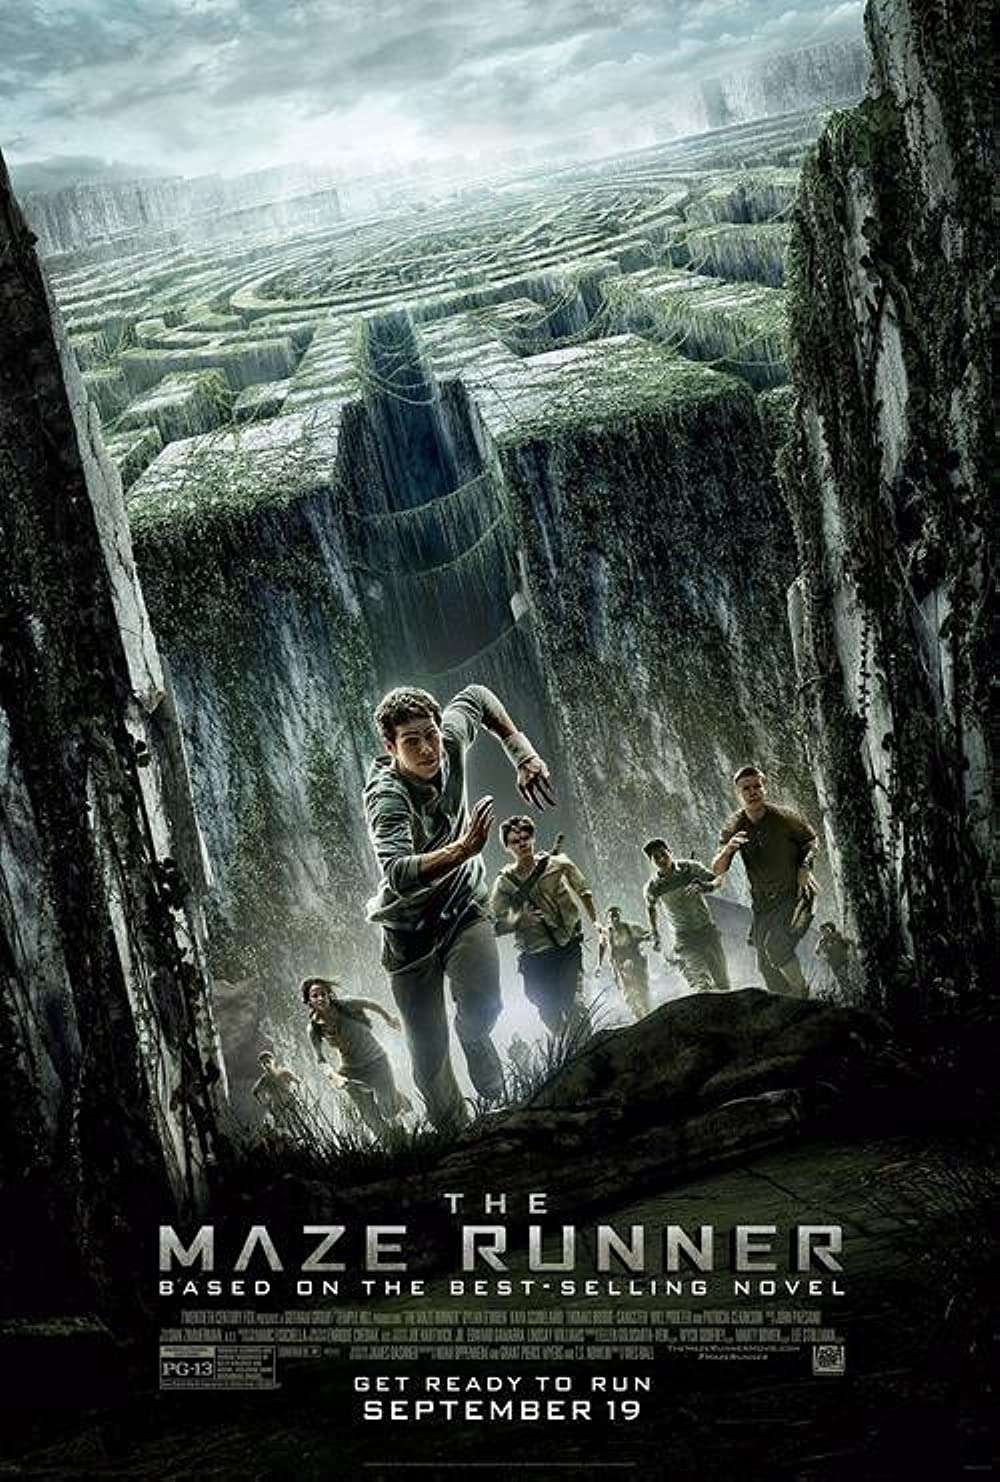 The Maze Runner Film Analysis